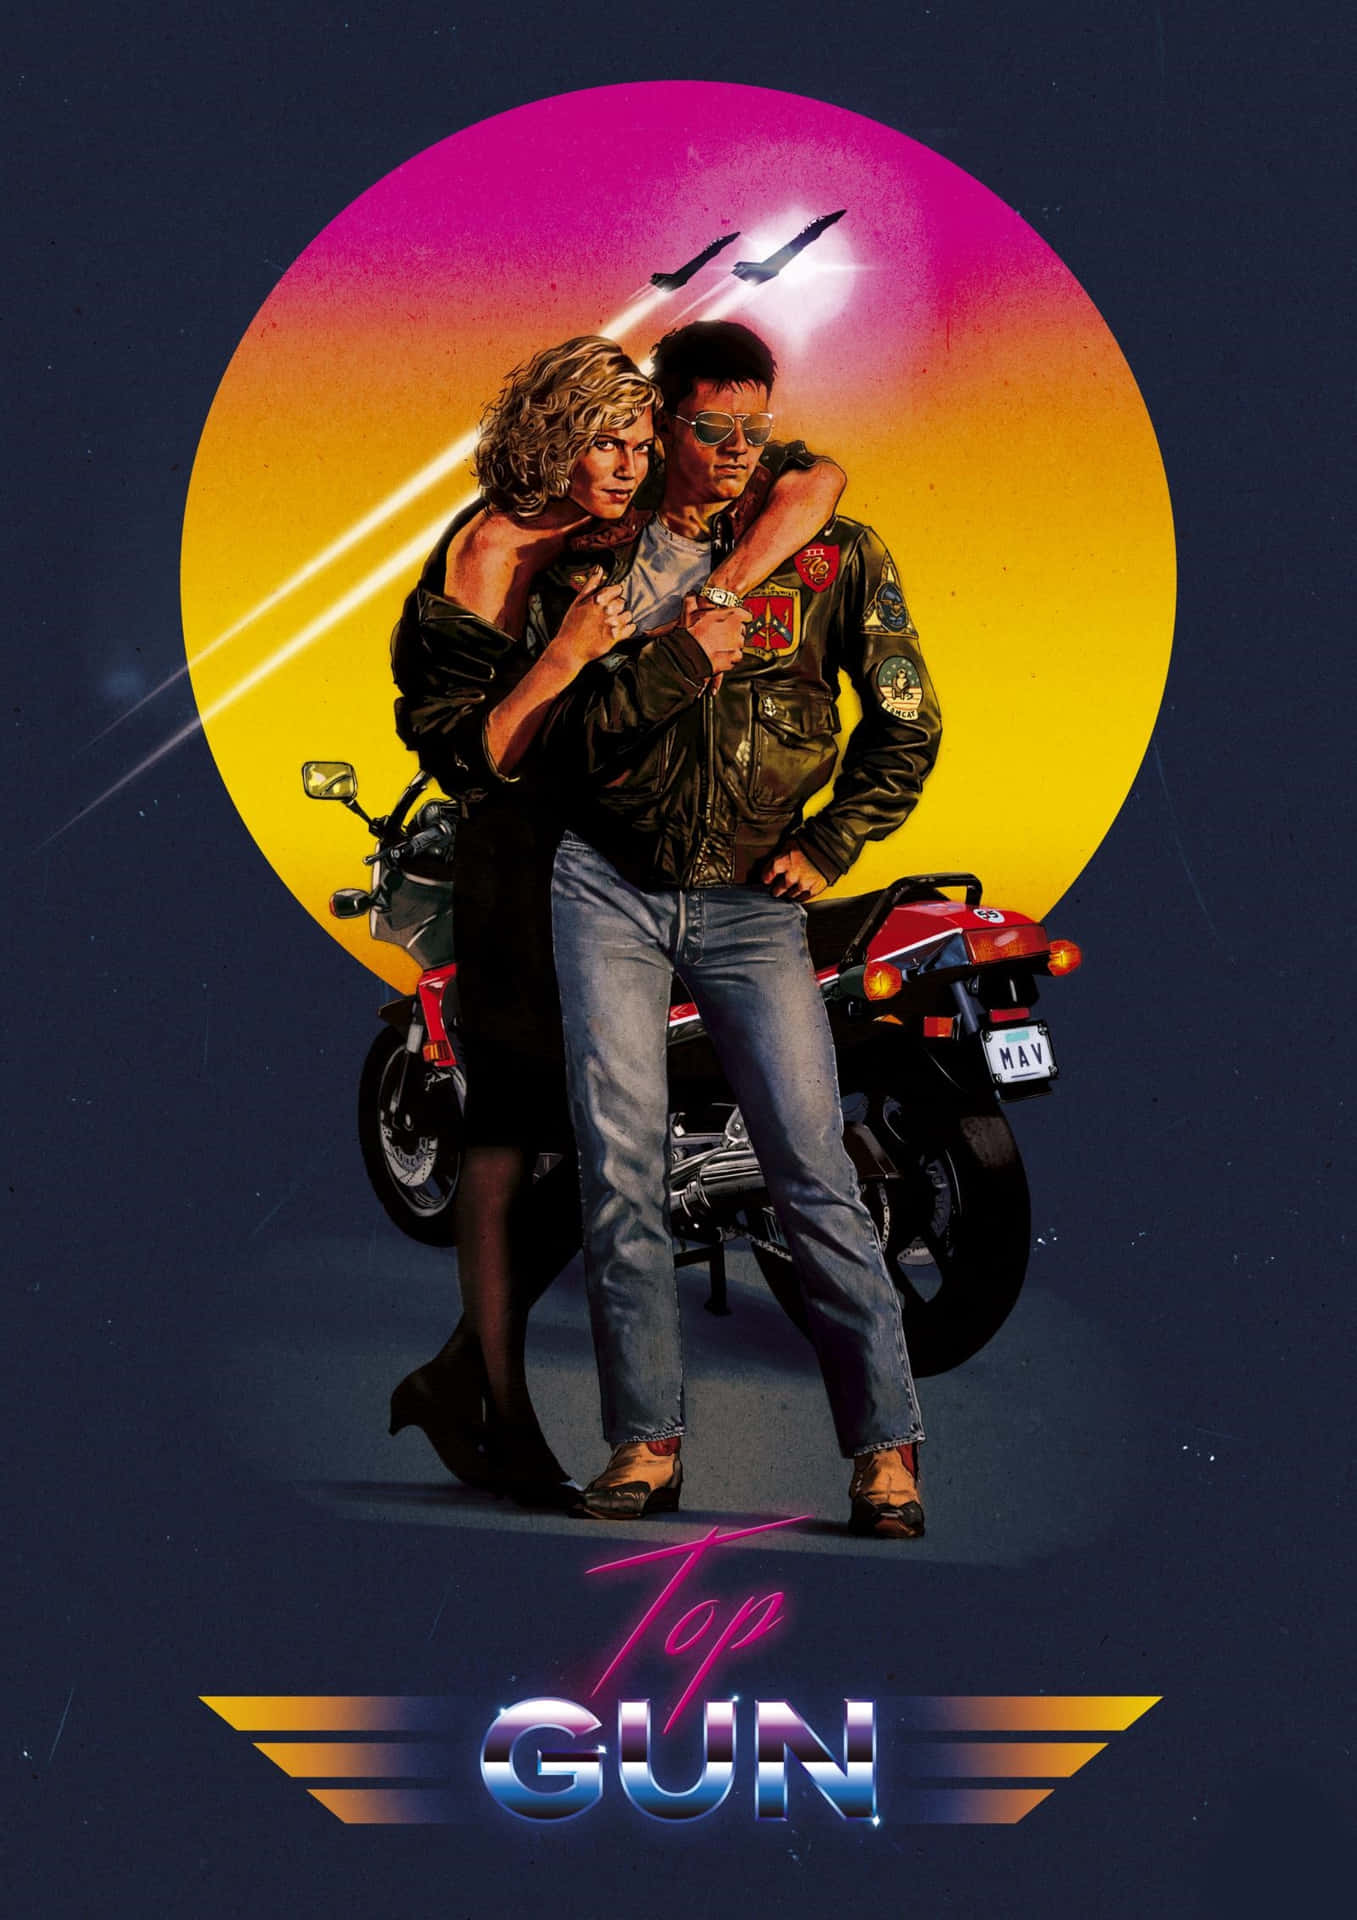 Top Gun Retro-style Movie Poster